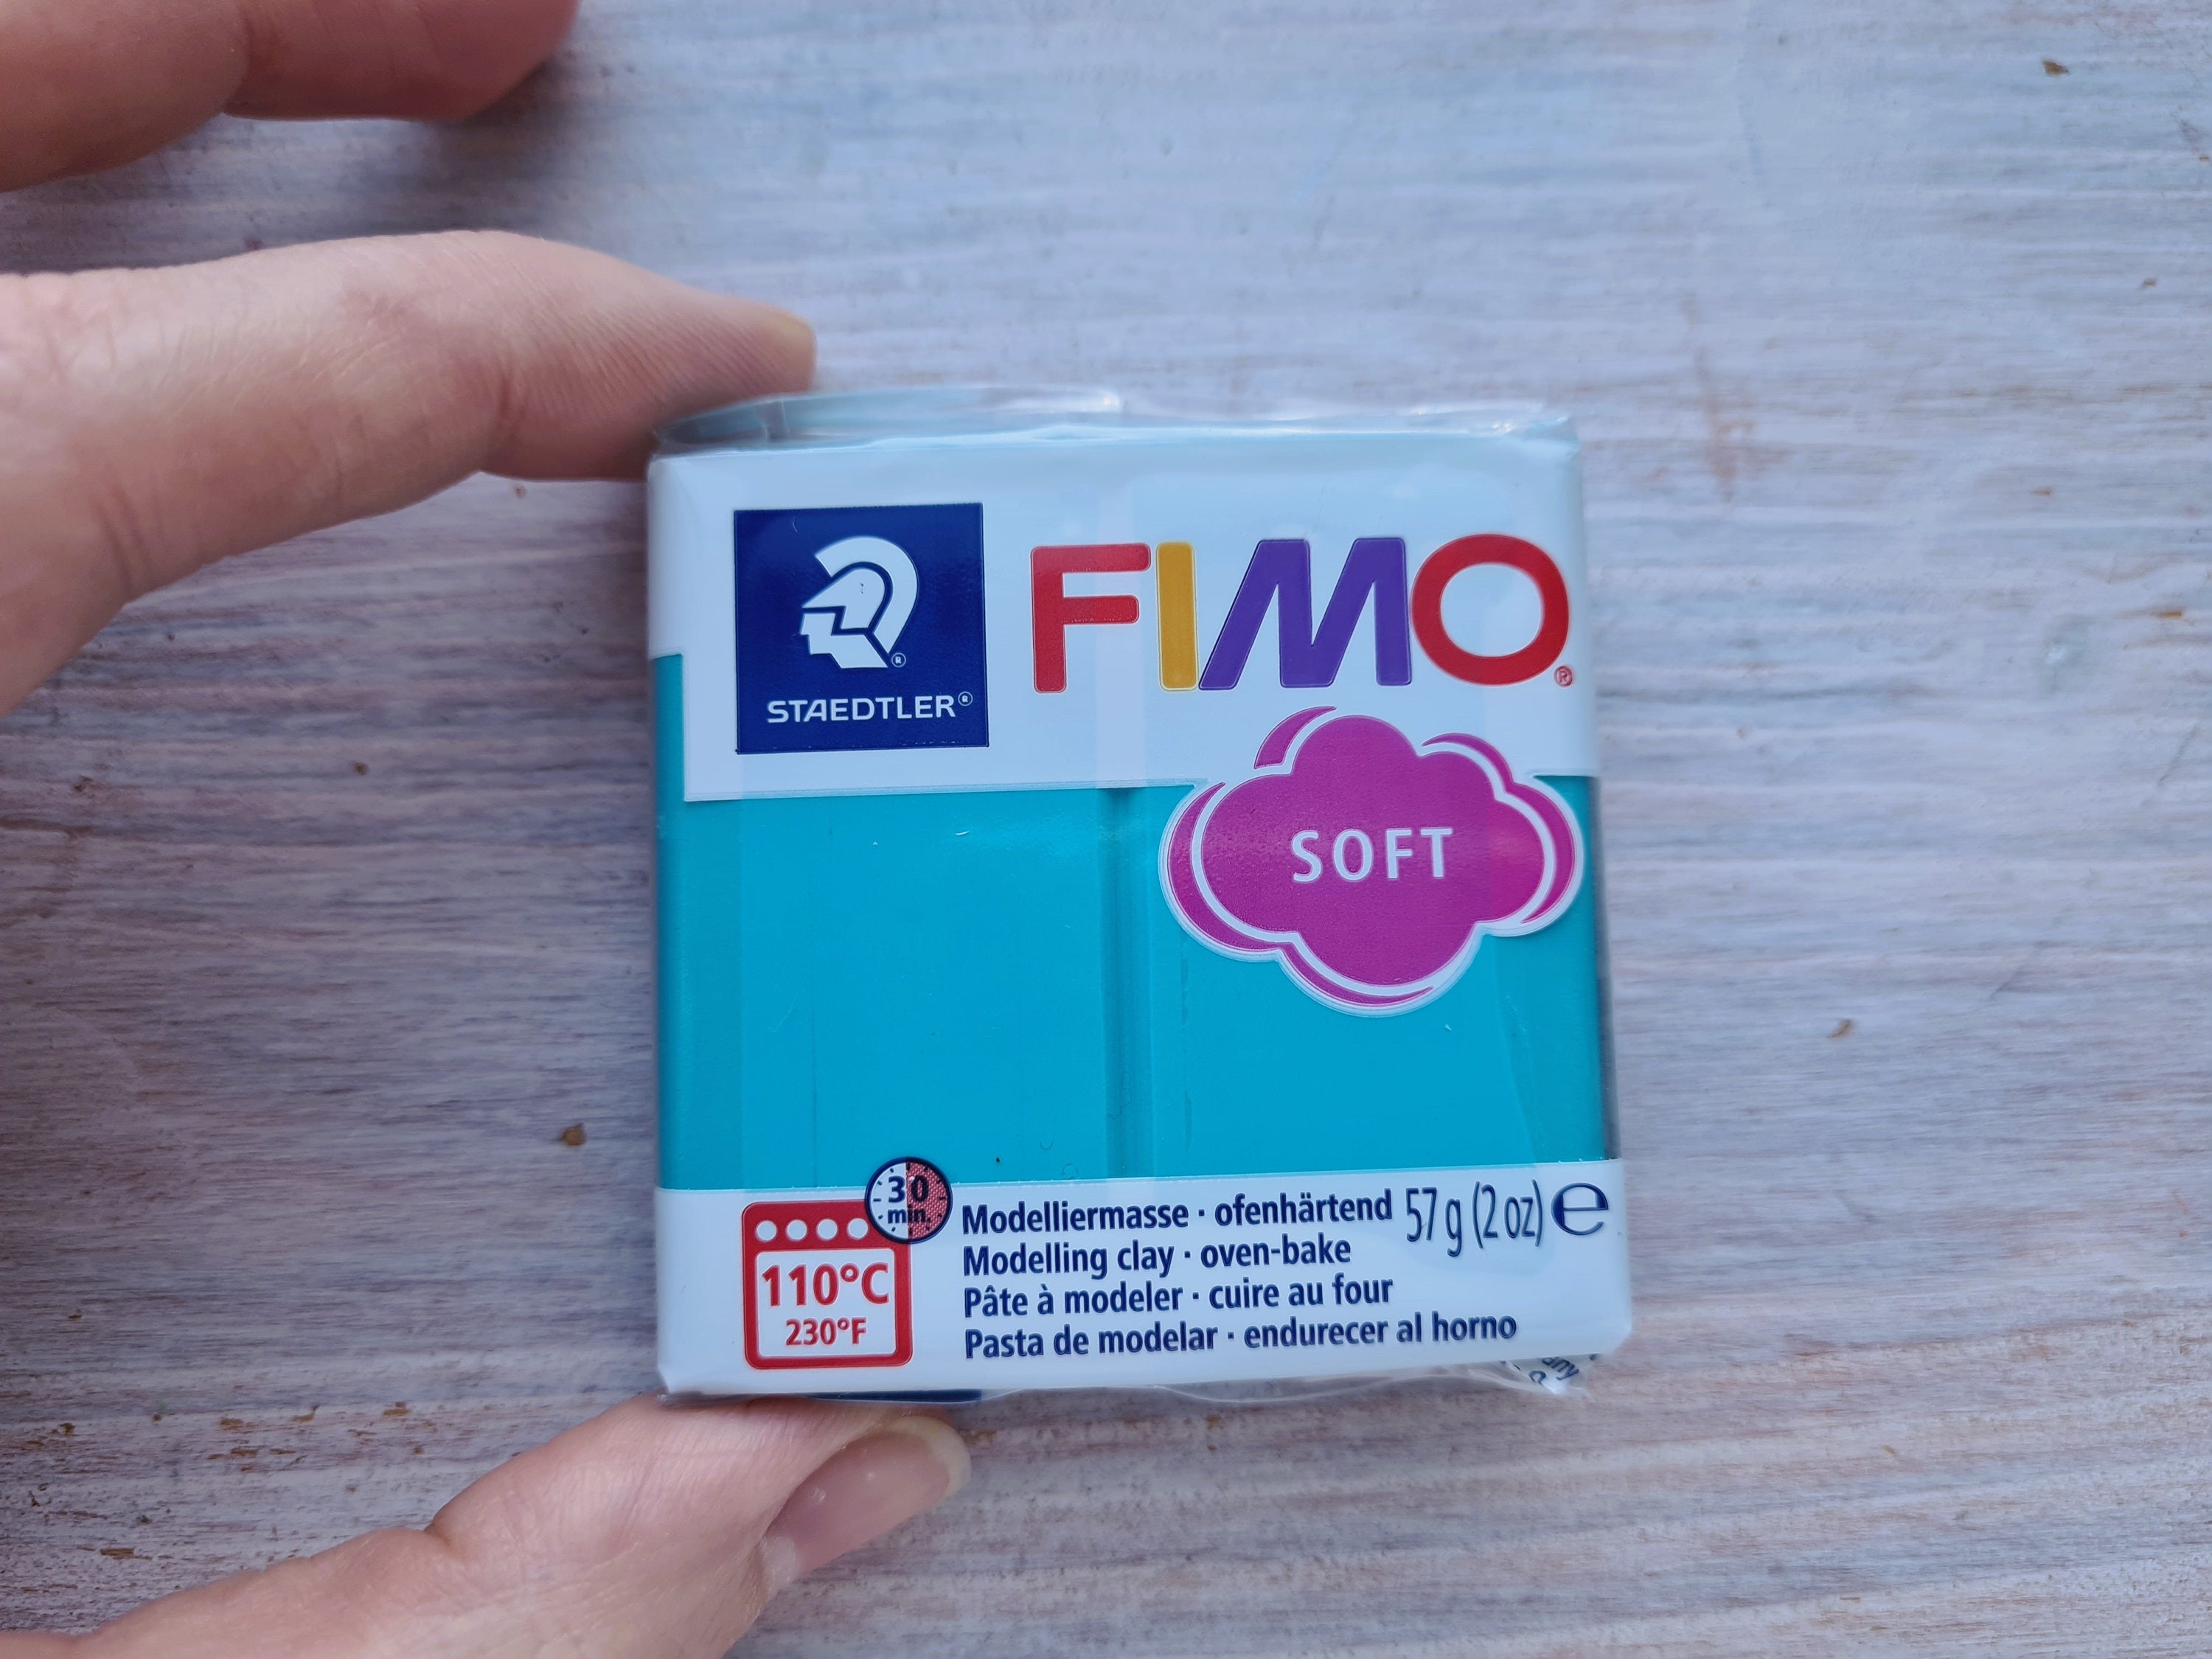 Arcilla polimérica FIMO Soft, rojo navidad, nr. 2P, 57 g 2 oz, arcilla  polimérica para modelar que se endurece al horno, colores Basic Fimo Soft  de STAEDTLER -  España